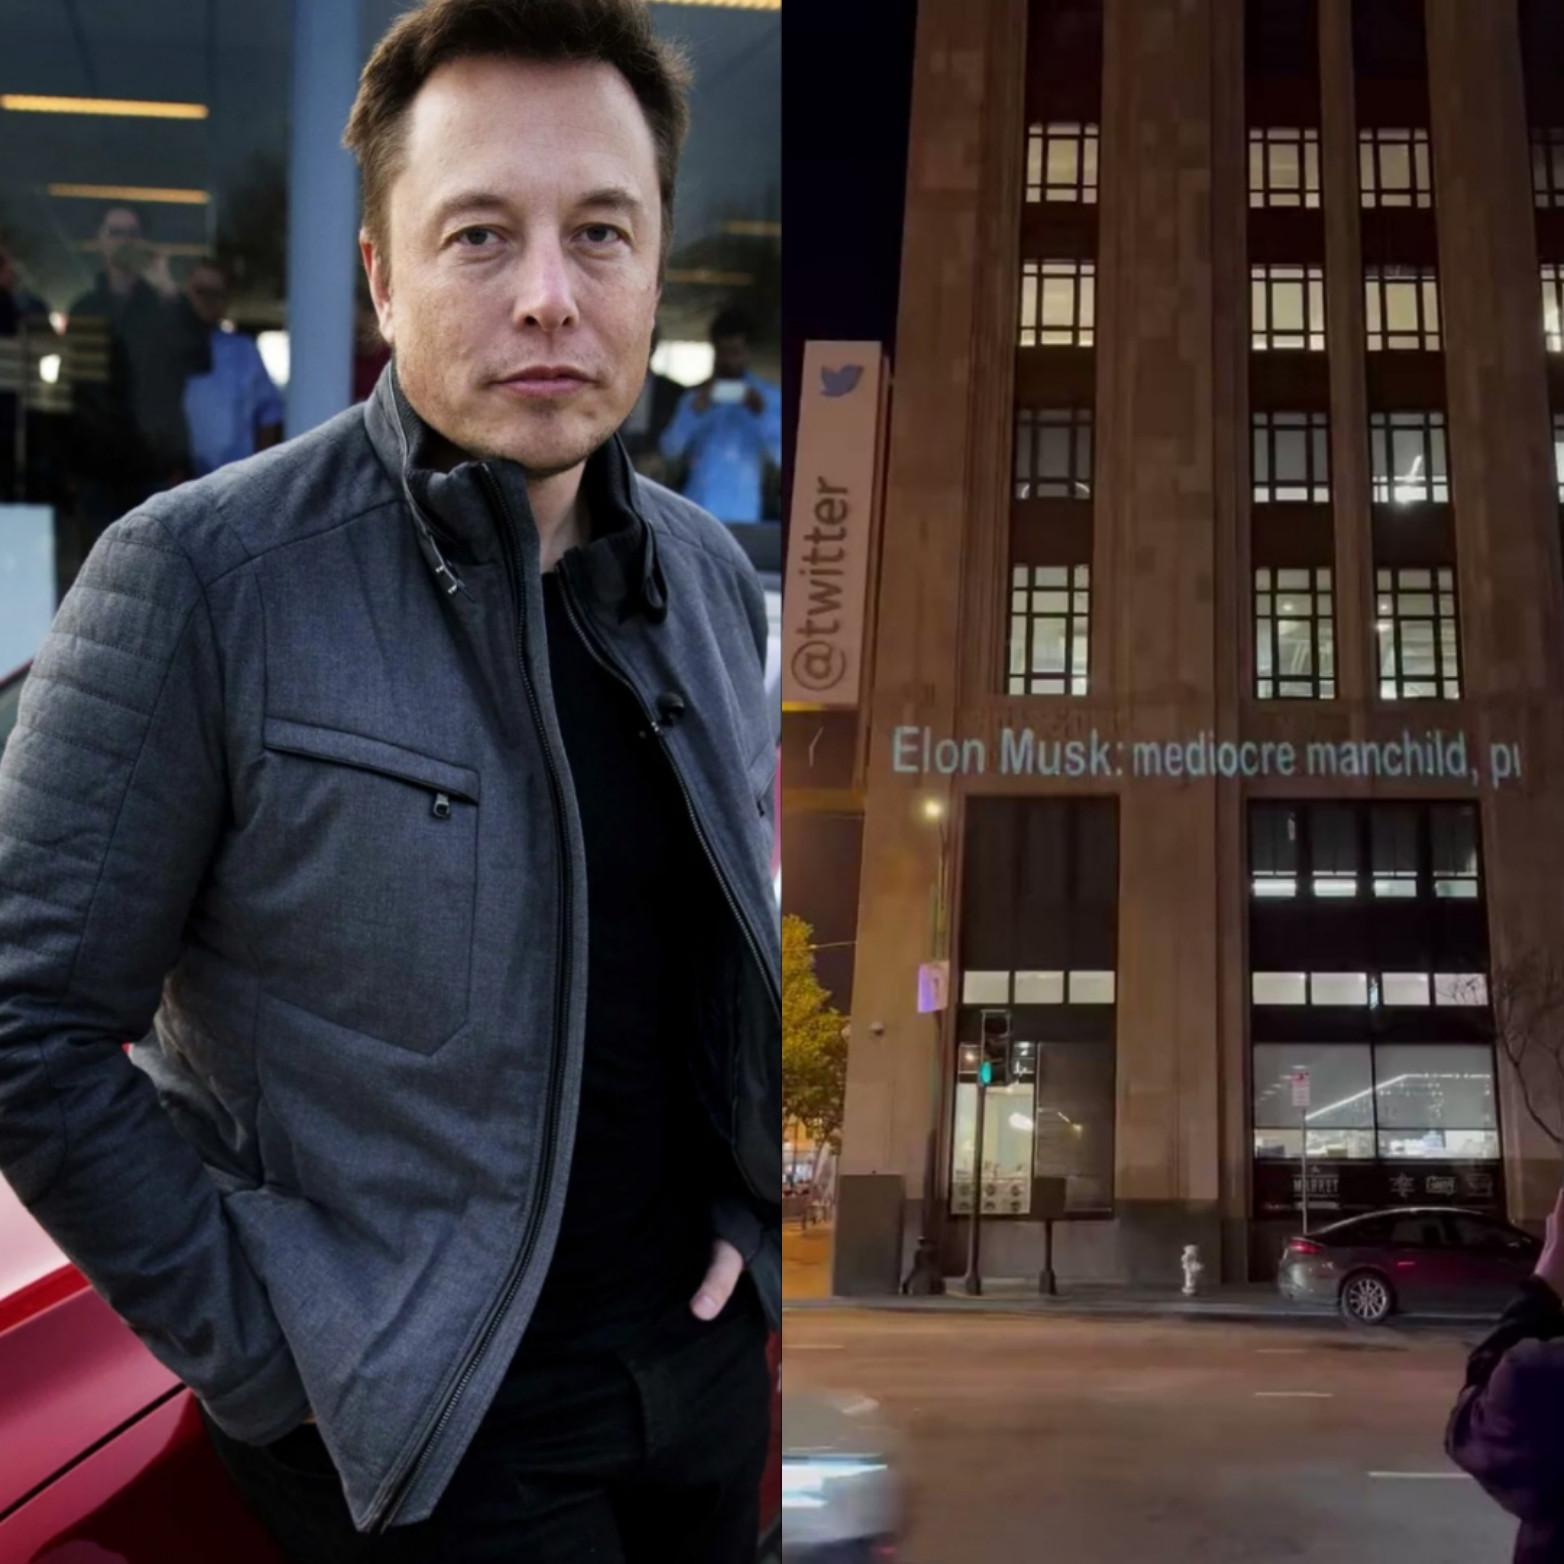 Projection calling Elon a